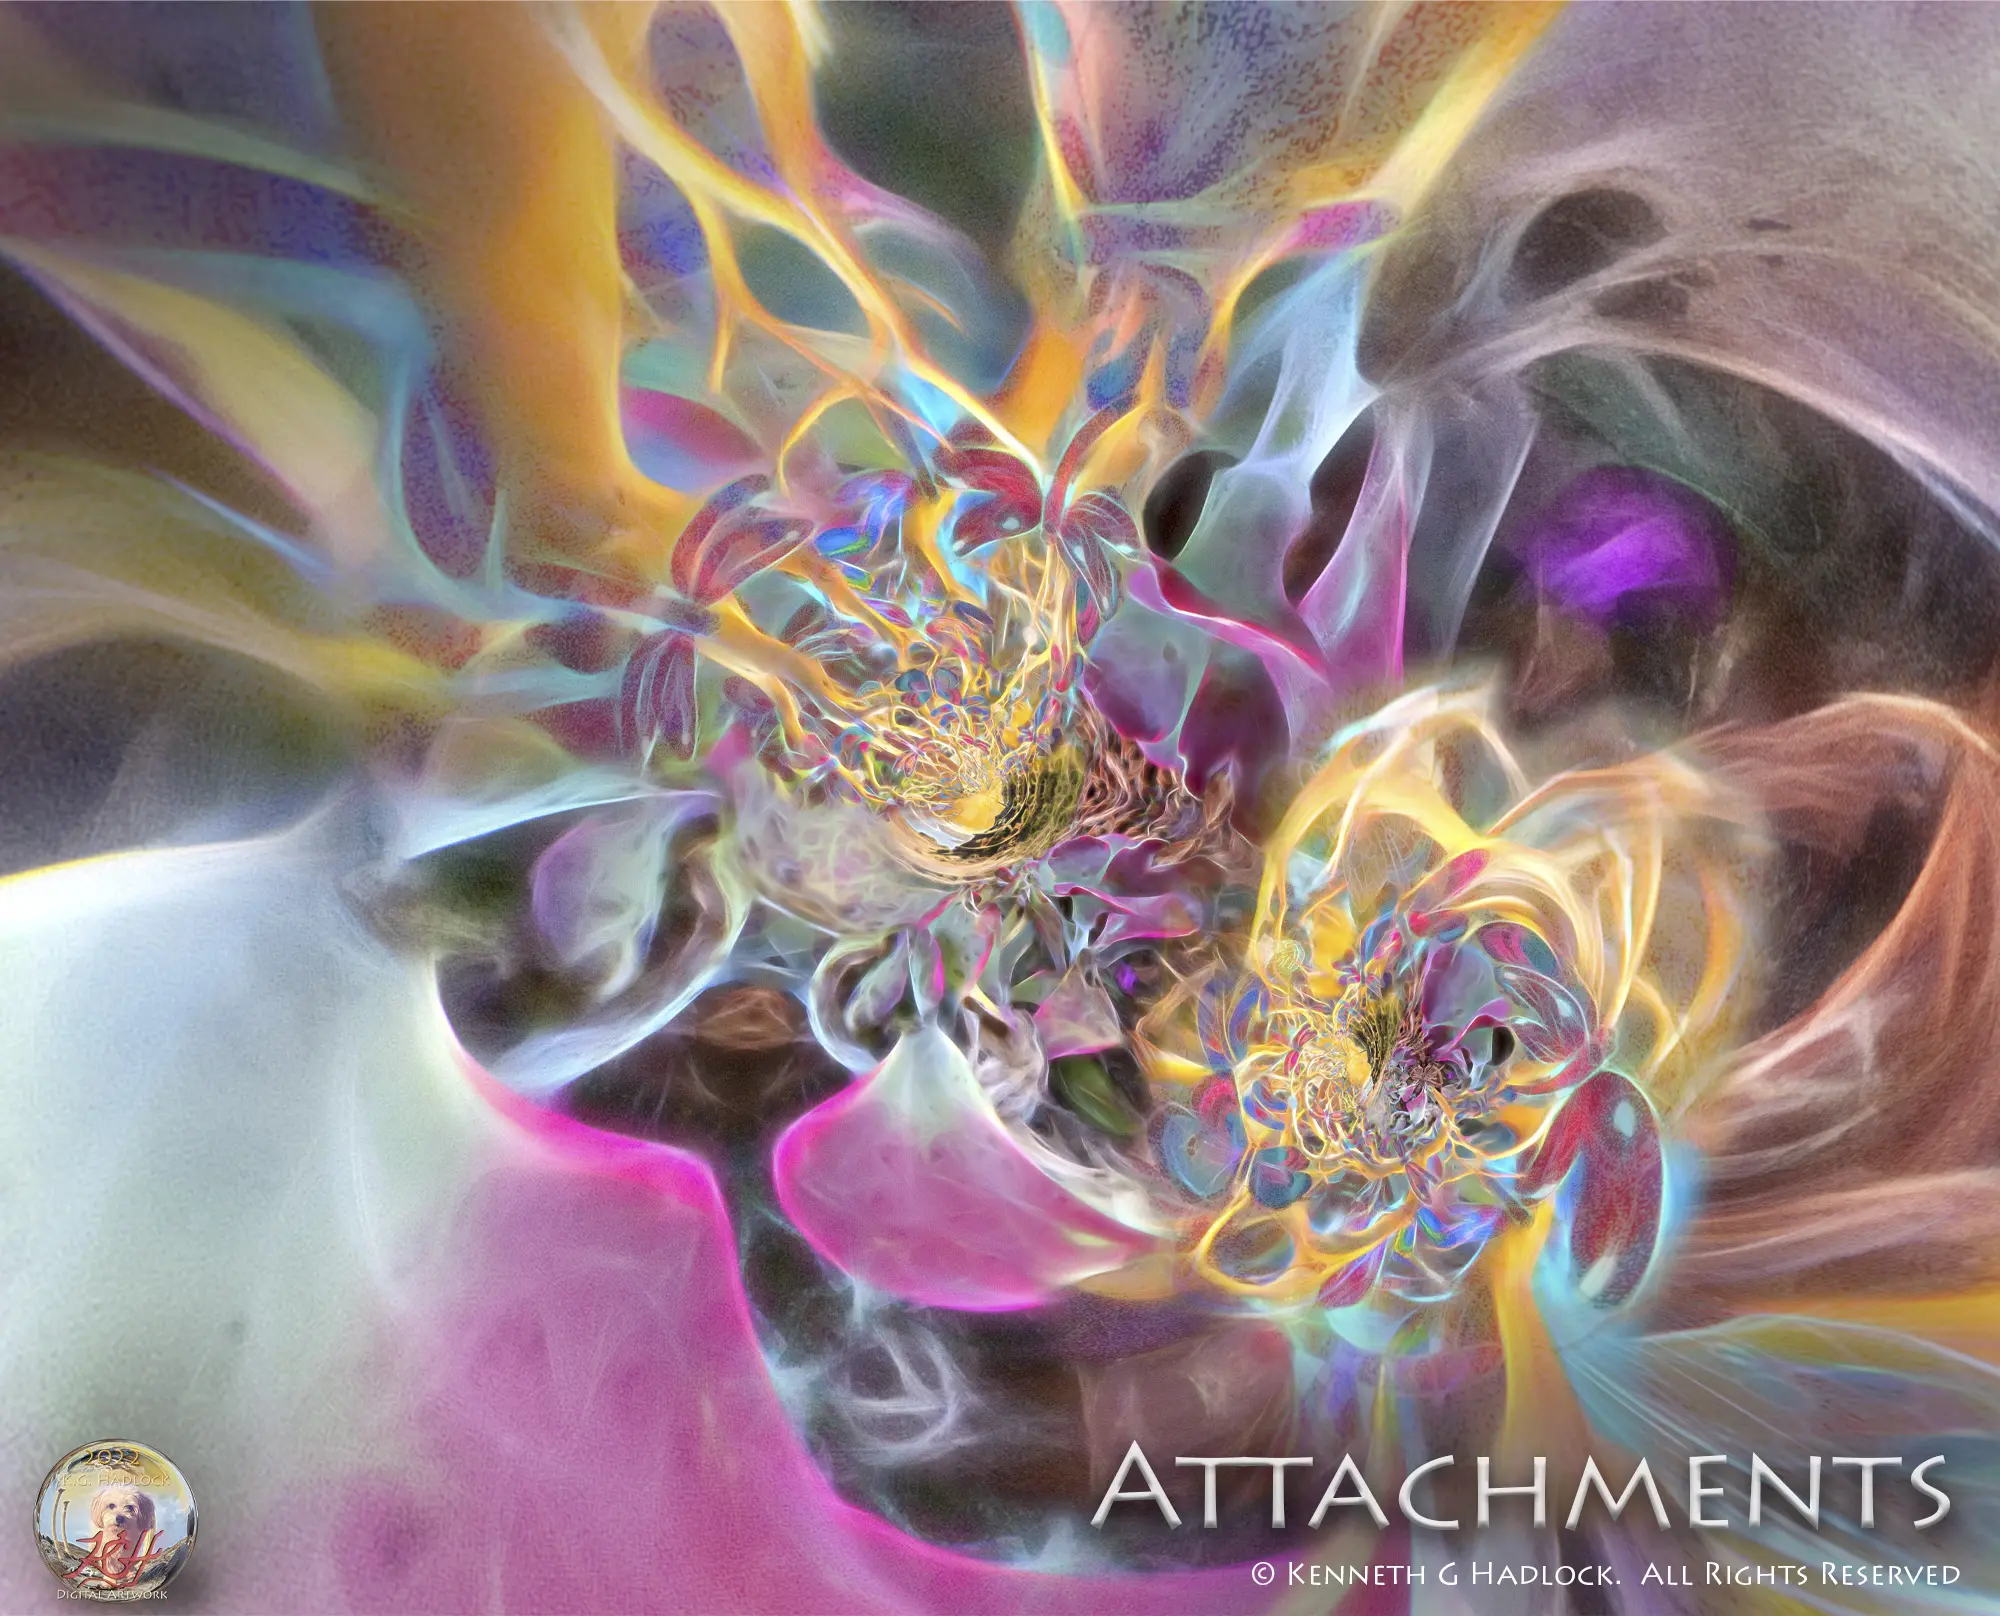 Digital Art - "Attachments"